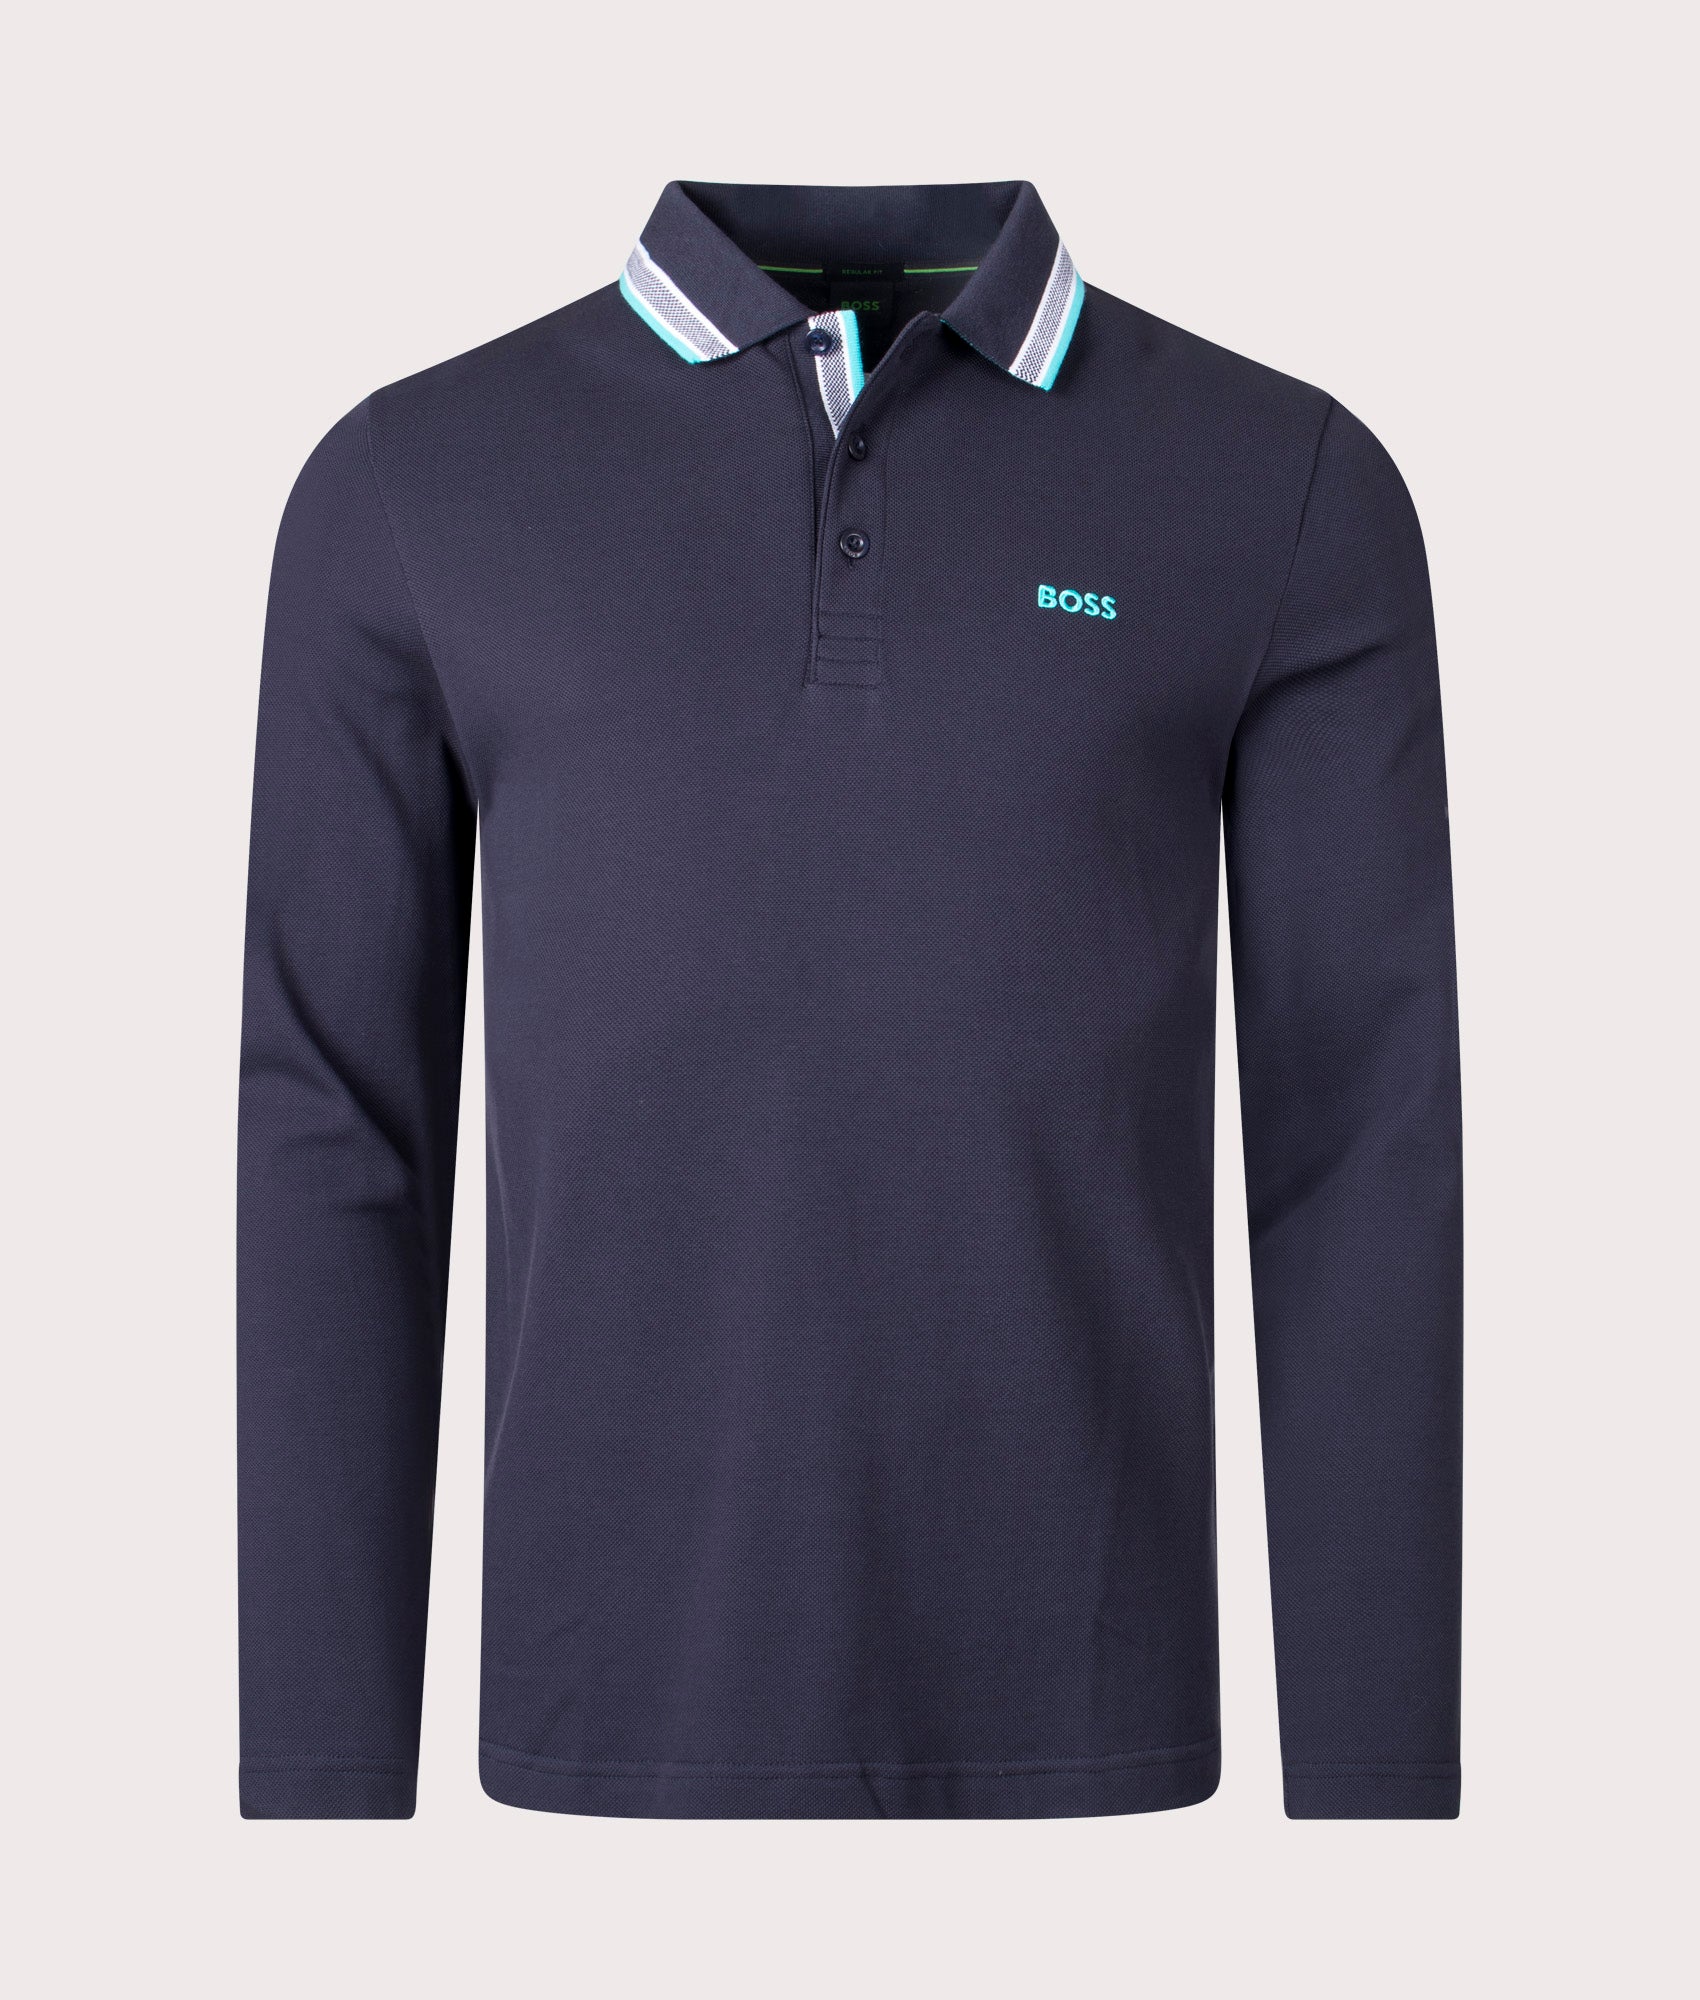 BOSS Mens Plisy Long Sleeve Polo Shirt - Colour: 402 Dark Blue - Size: Medium